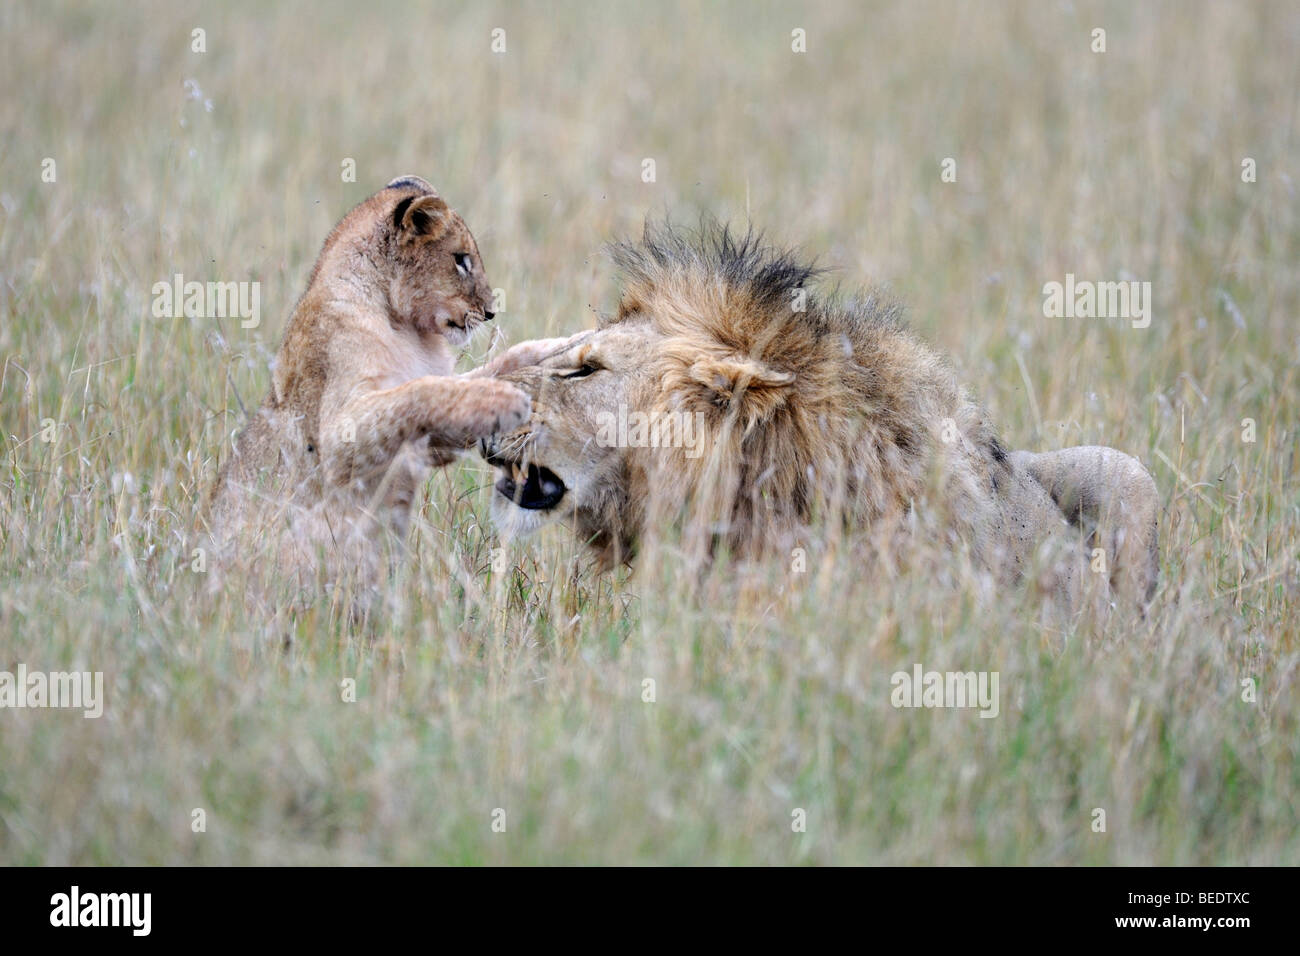 Lion (Panthera leo), maned lion giocando con cub, il Masai Mara, parco nazionale, Kenya, Africa orientale Foto Stock